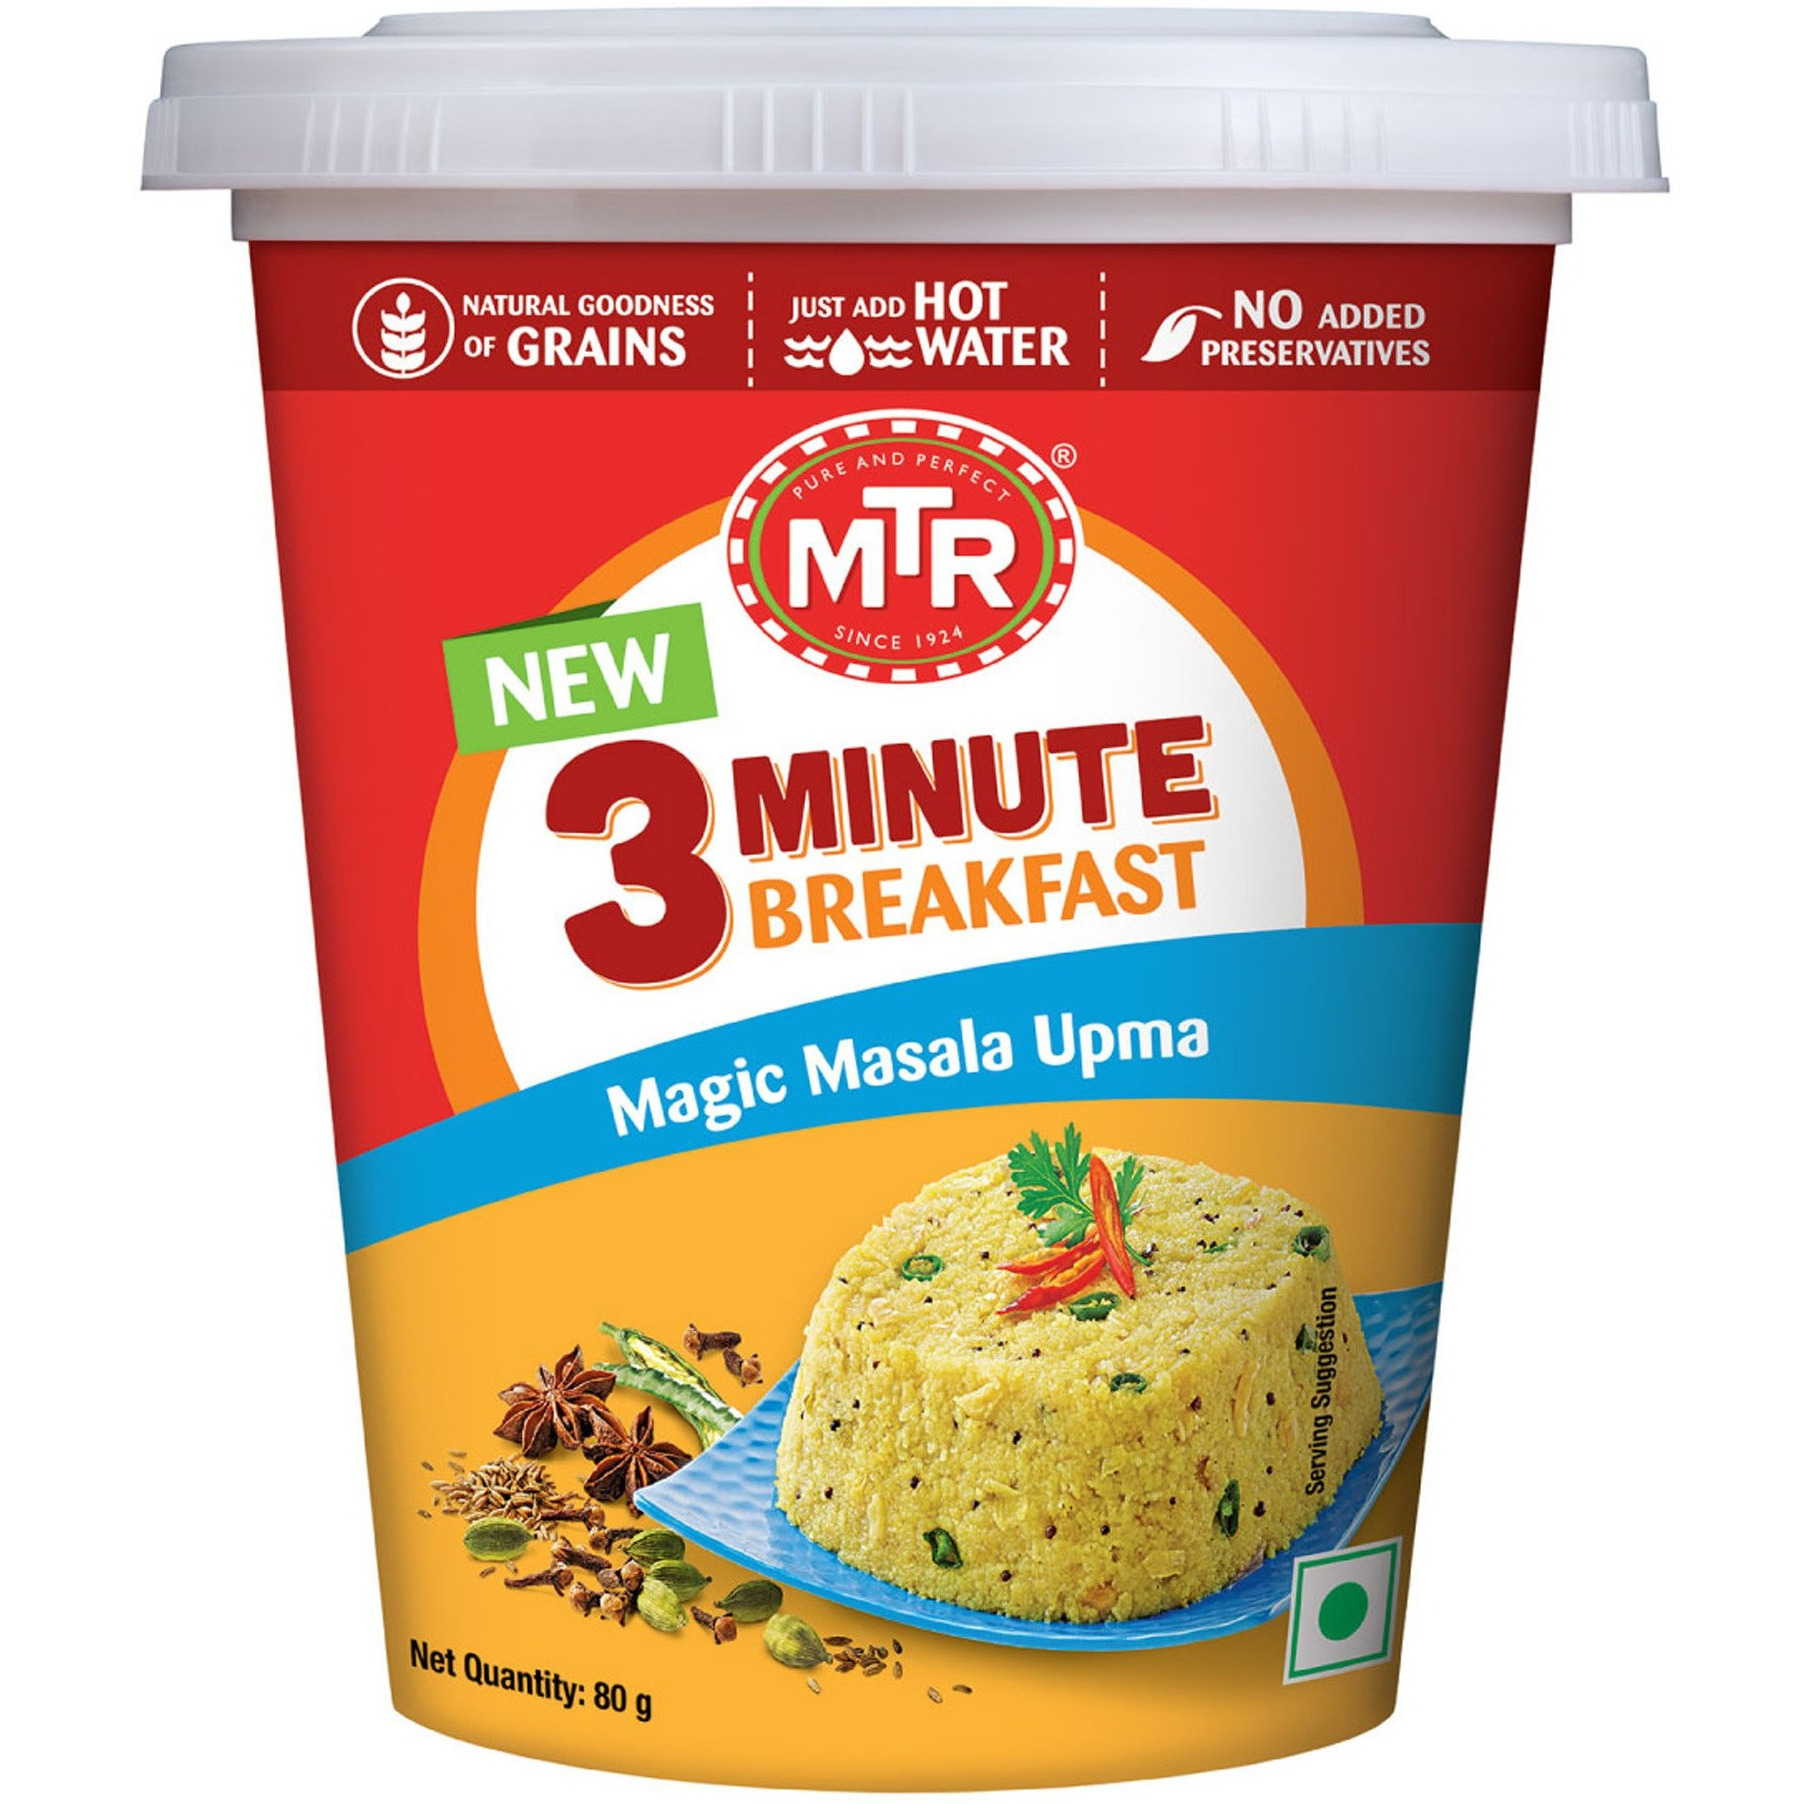 Pack of 3 - Mtr 3 Minute Breakfast Cup Magic Masala Upma - 79 Gm (2.82 Oz)